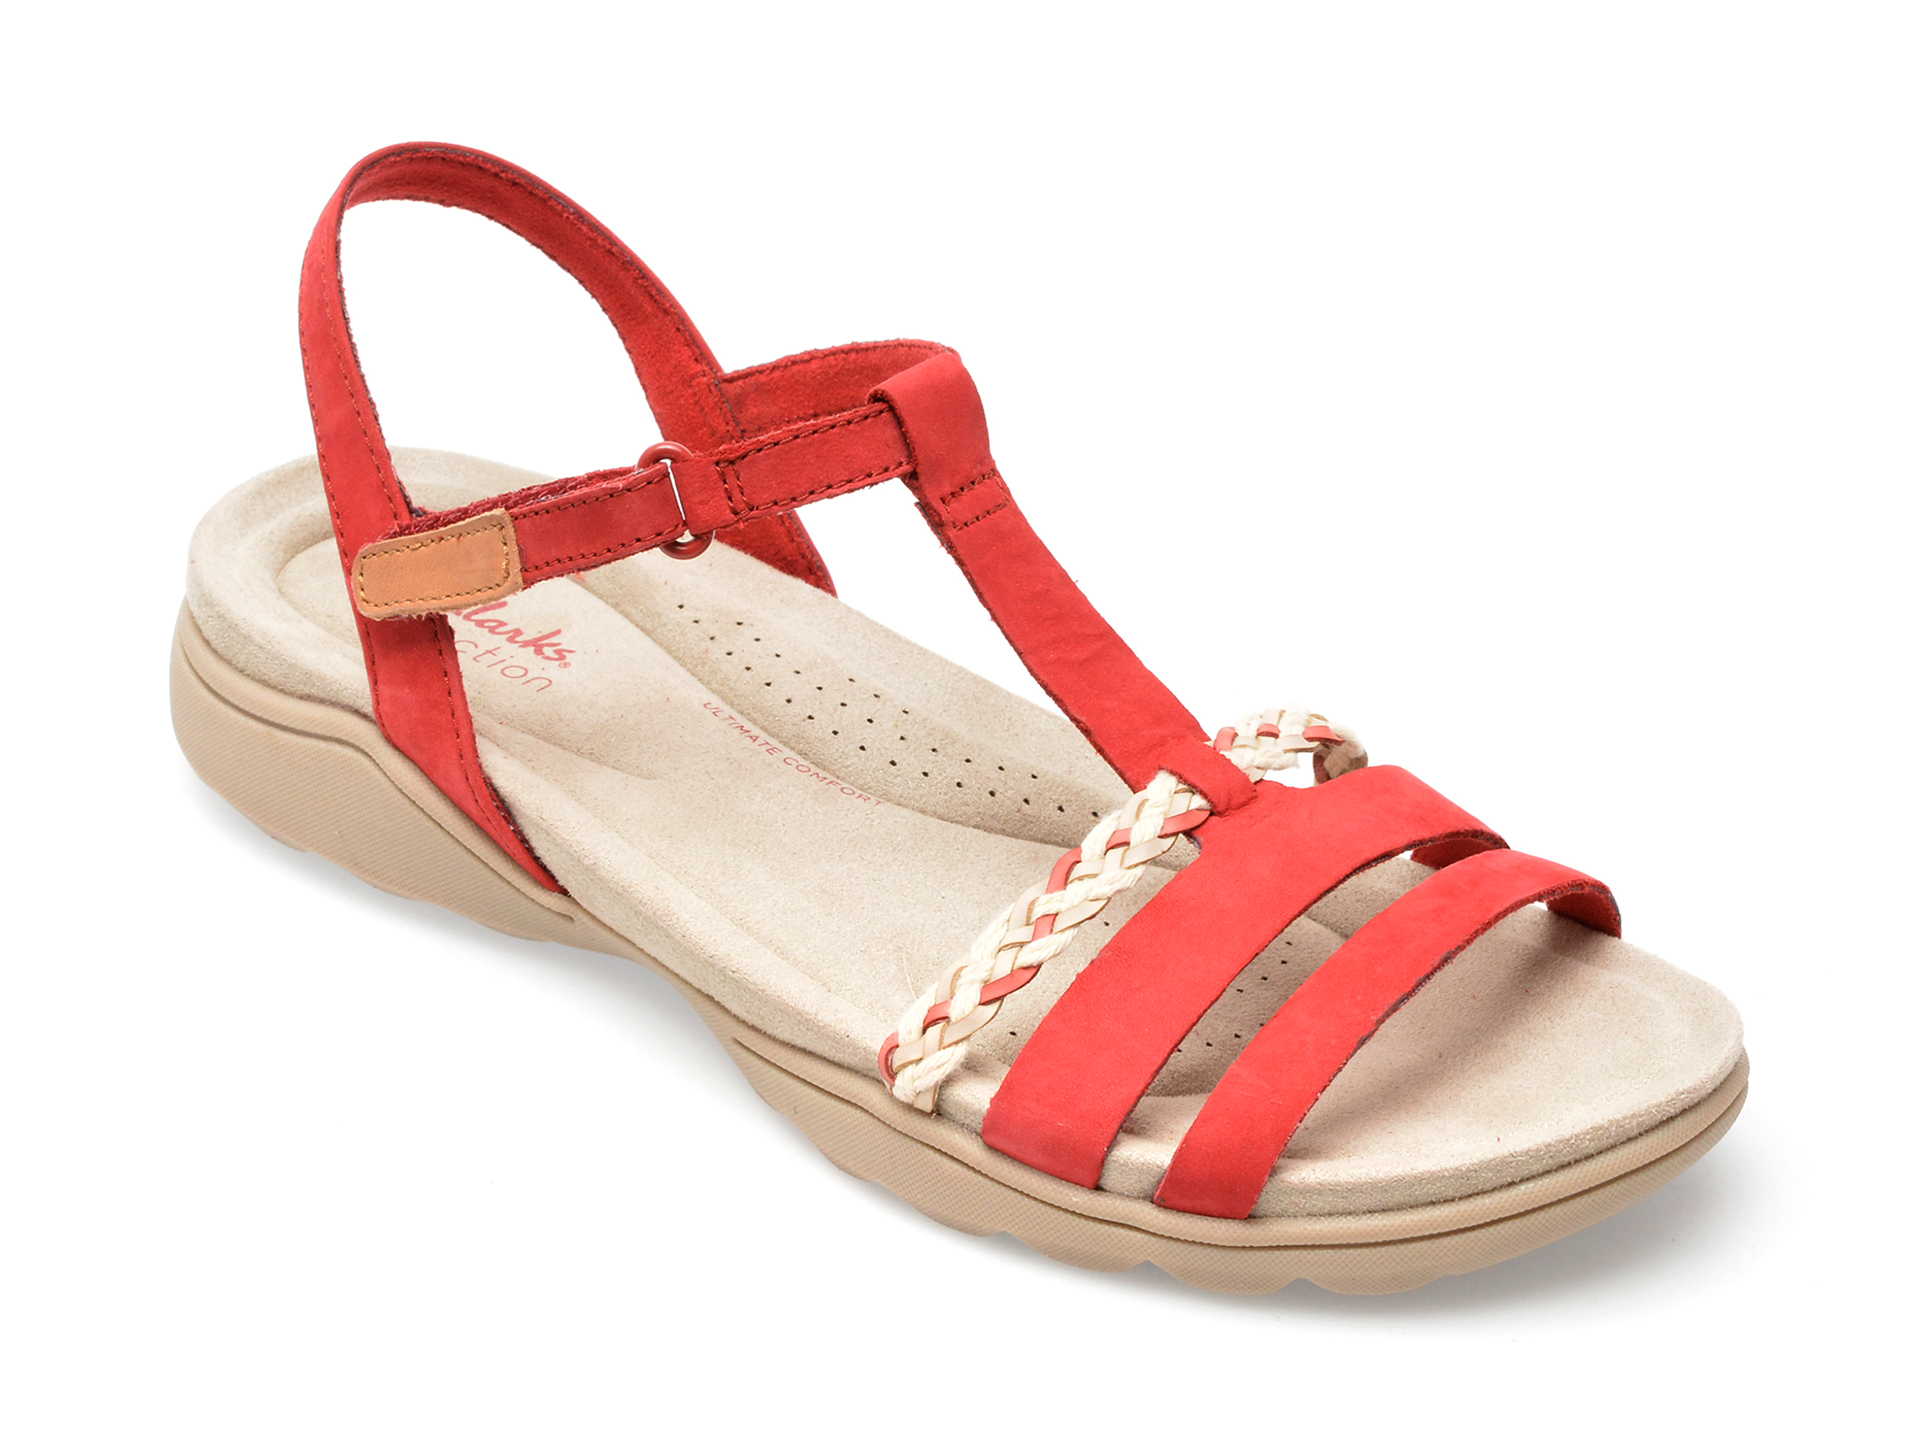 Sandale CLARKS rosii, AMANDA TEALITE 0912, din nabuc femei 2023-09-23